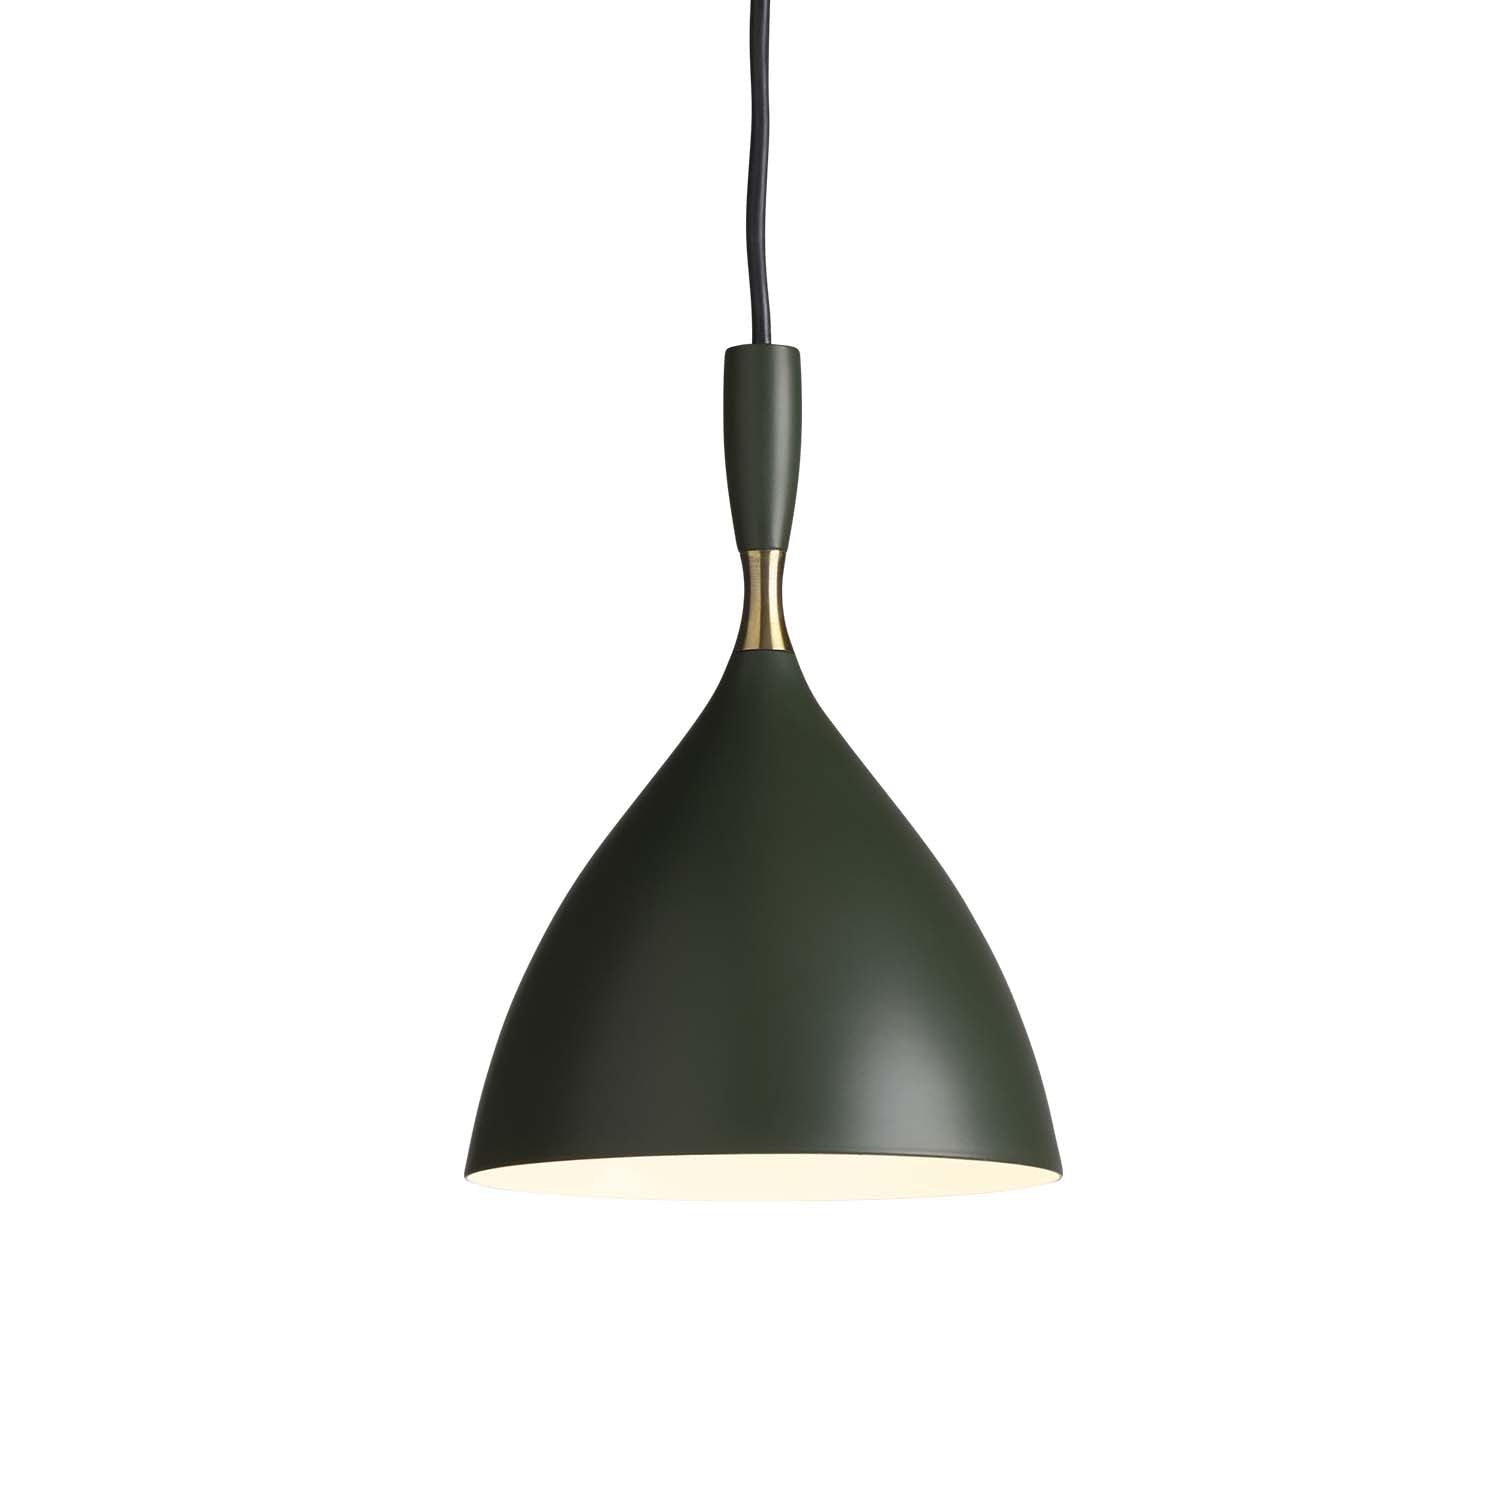 DOKKA - Scandinavian design and vintage pendant lamp for living room